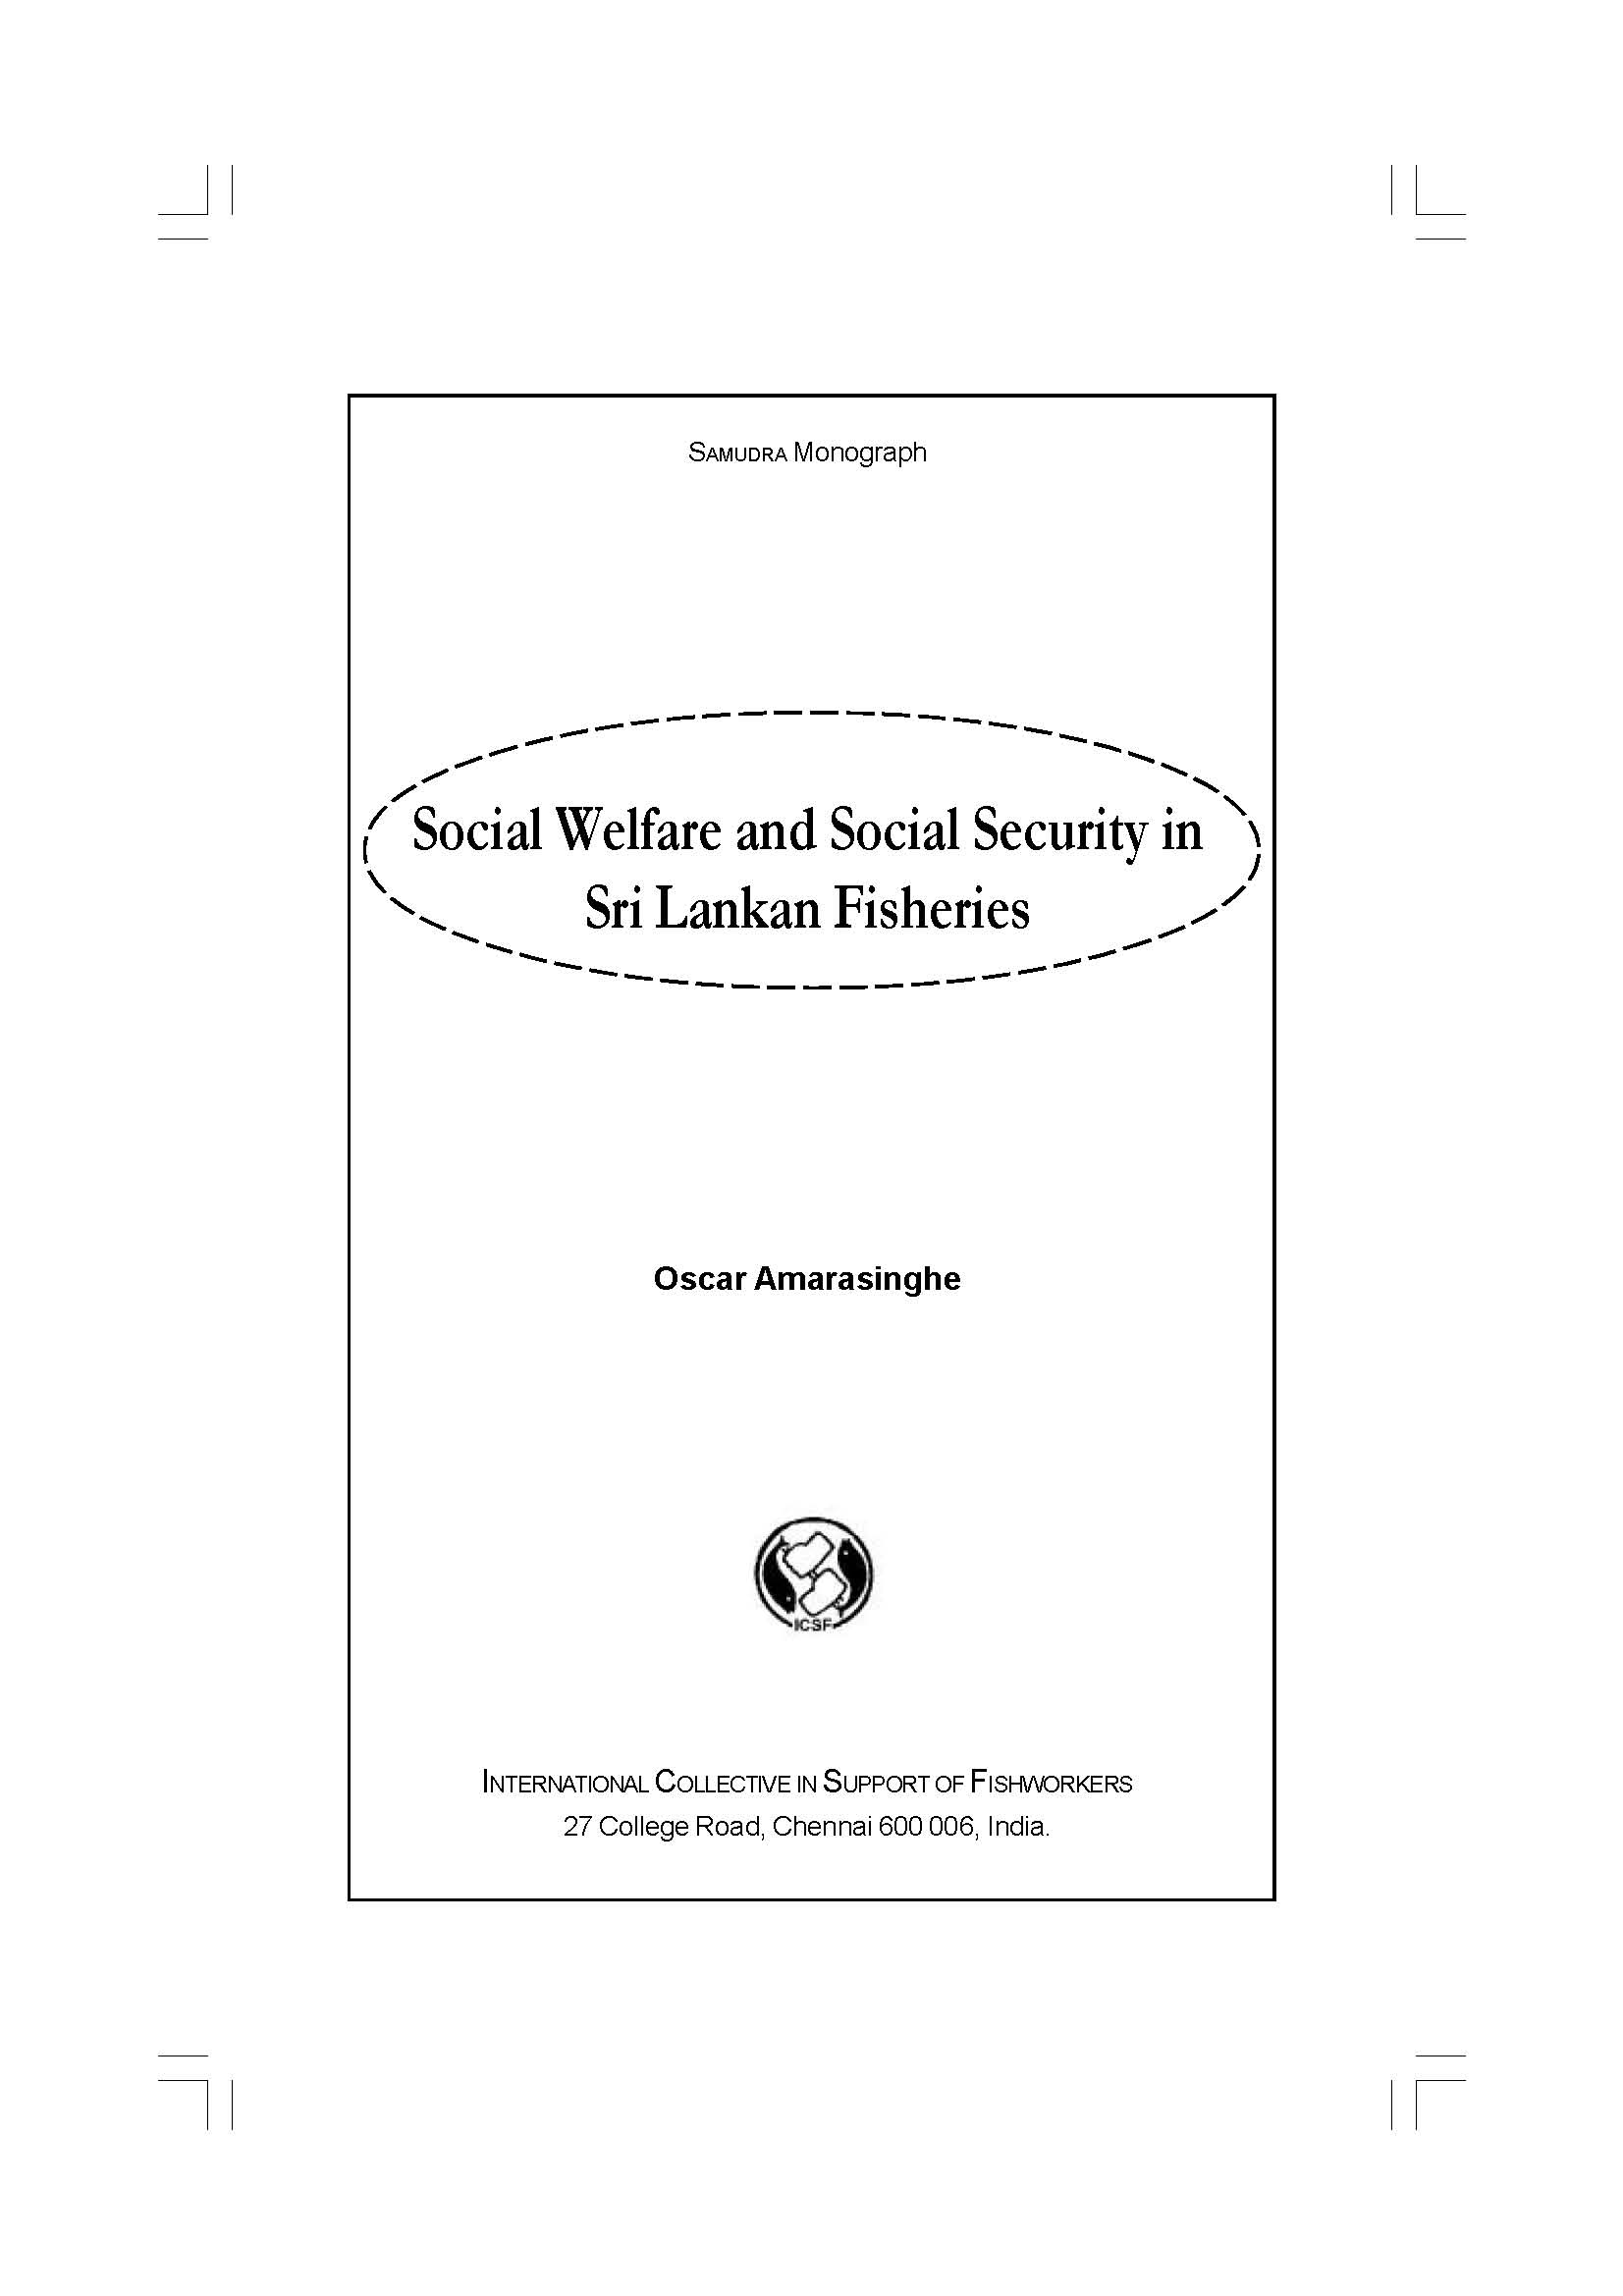 Social Welfare and Social Security in Sri Lankan Fisheries